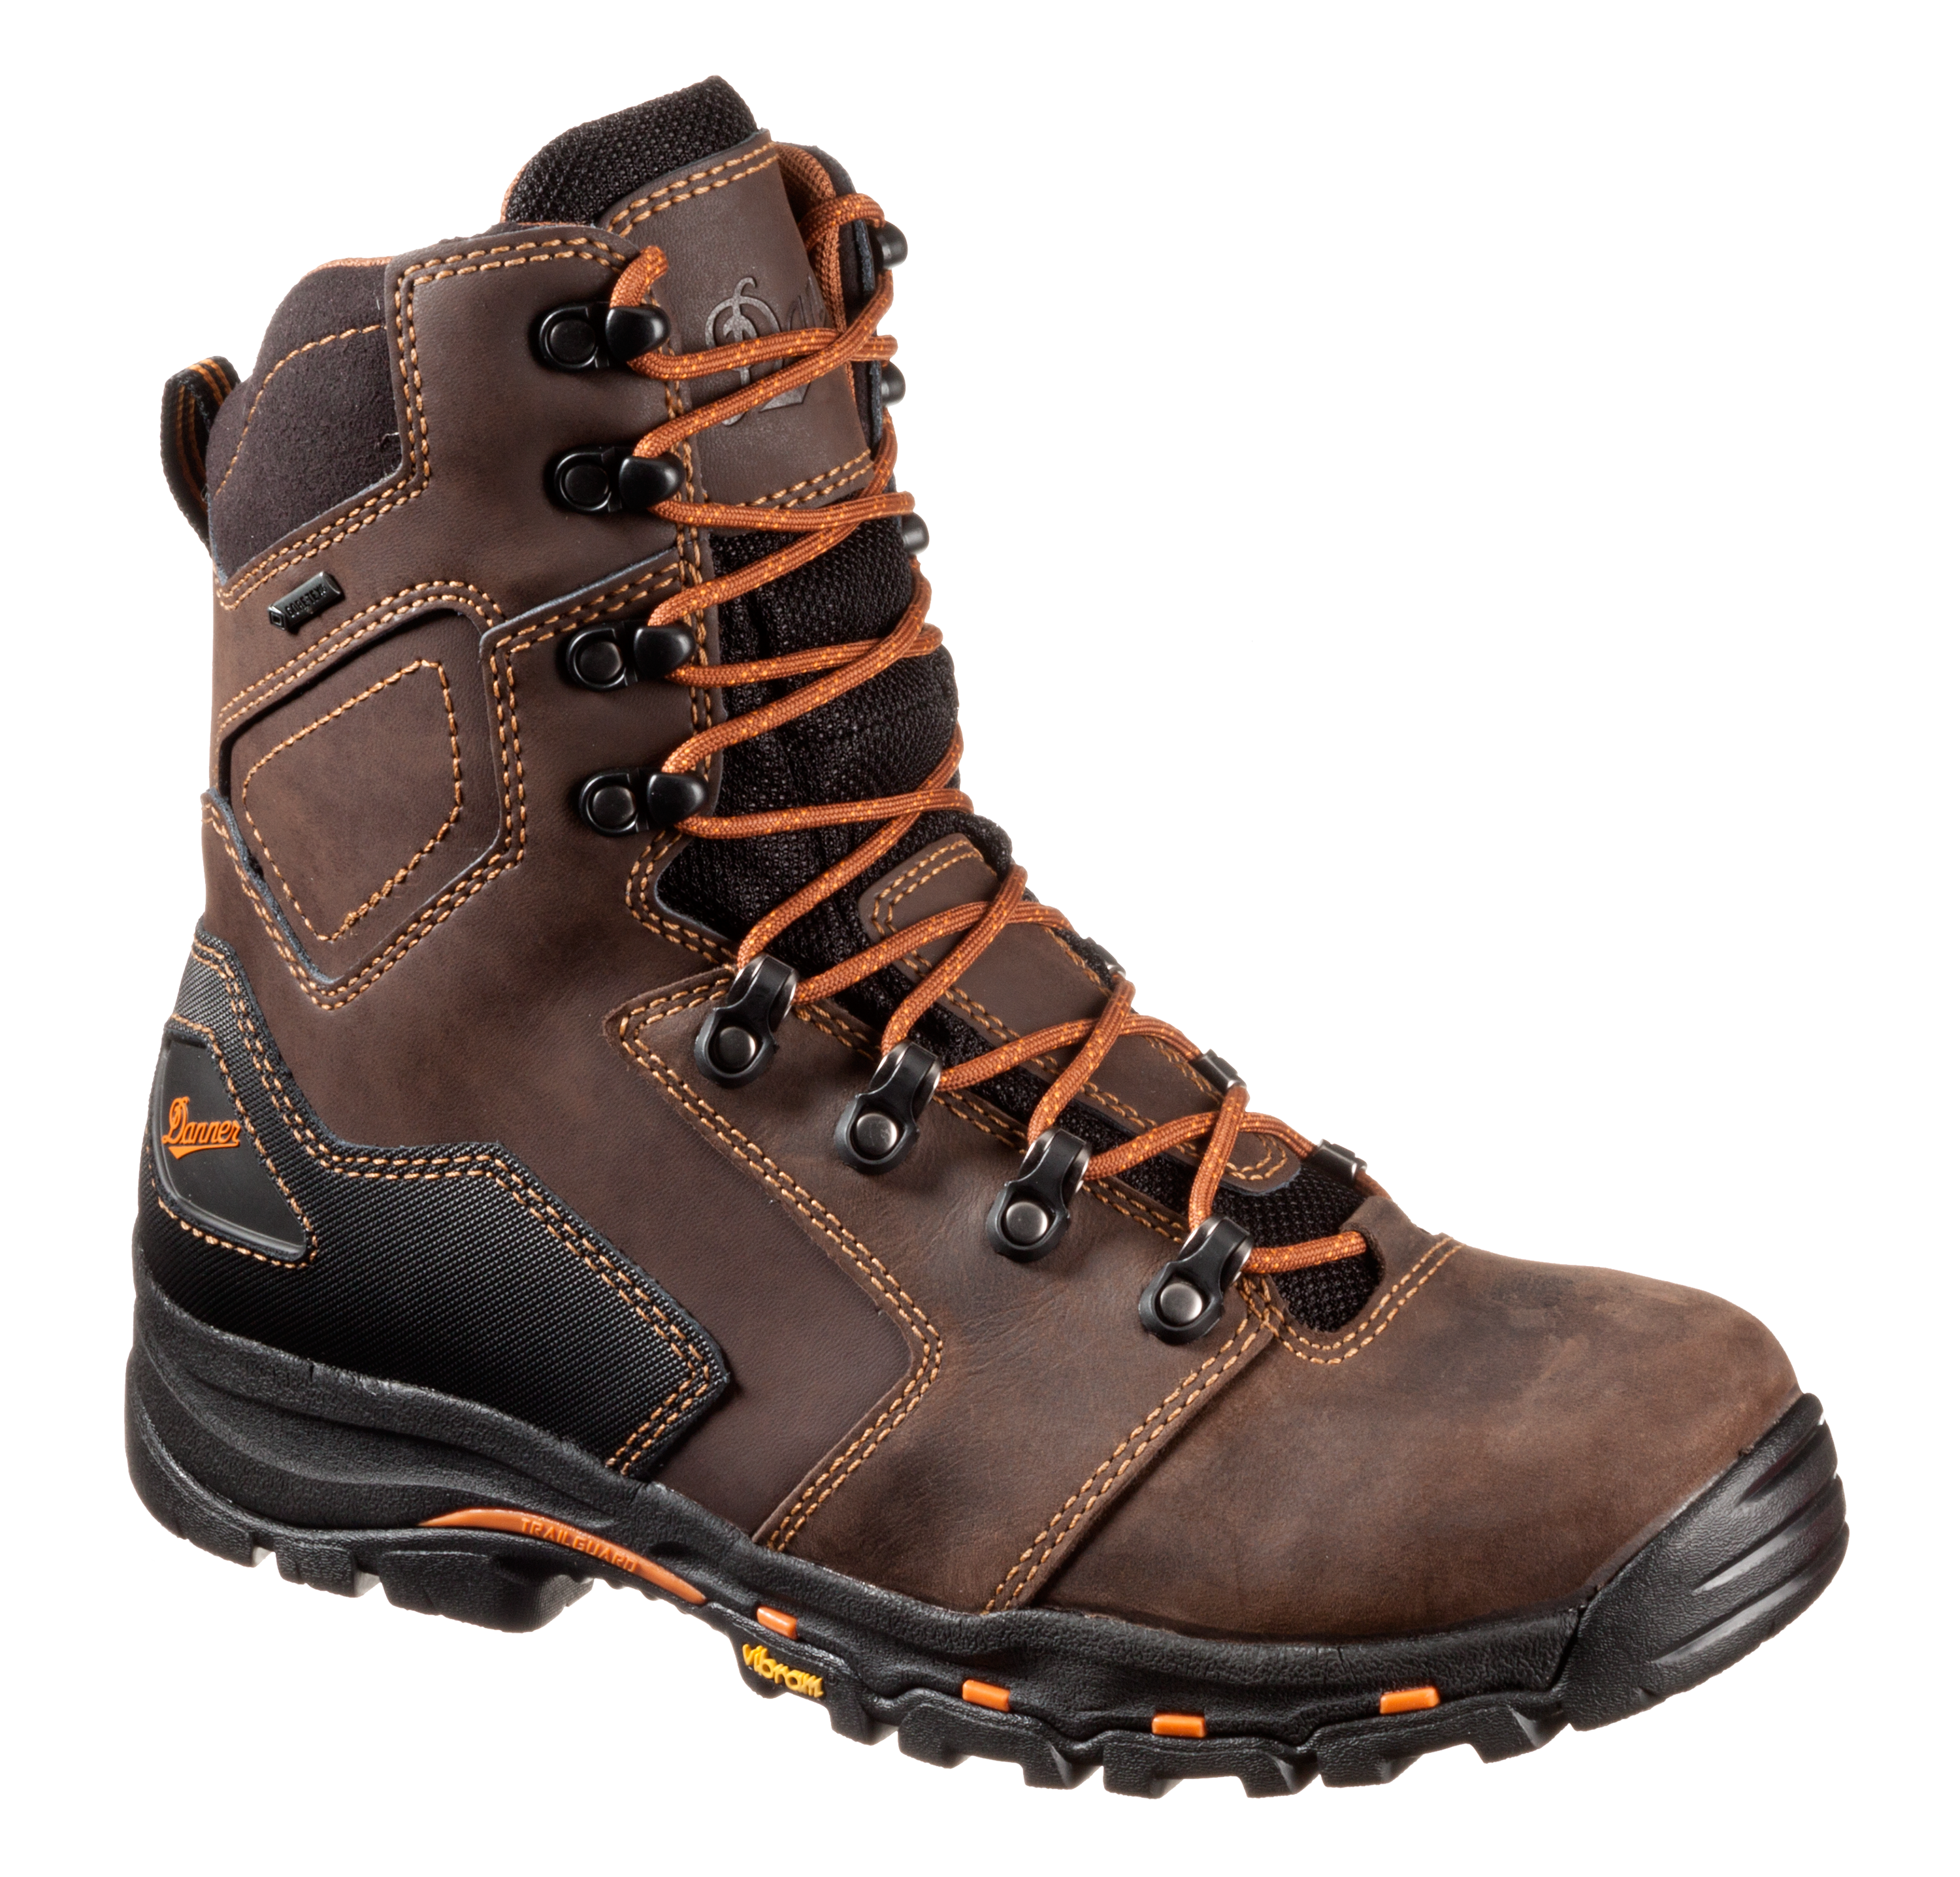 Danner Vicious GORE-TEX Work Boots for Men - Brown - 8.5 M